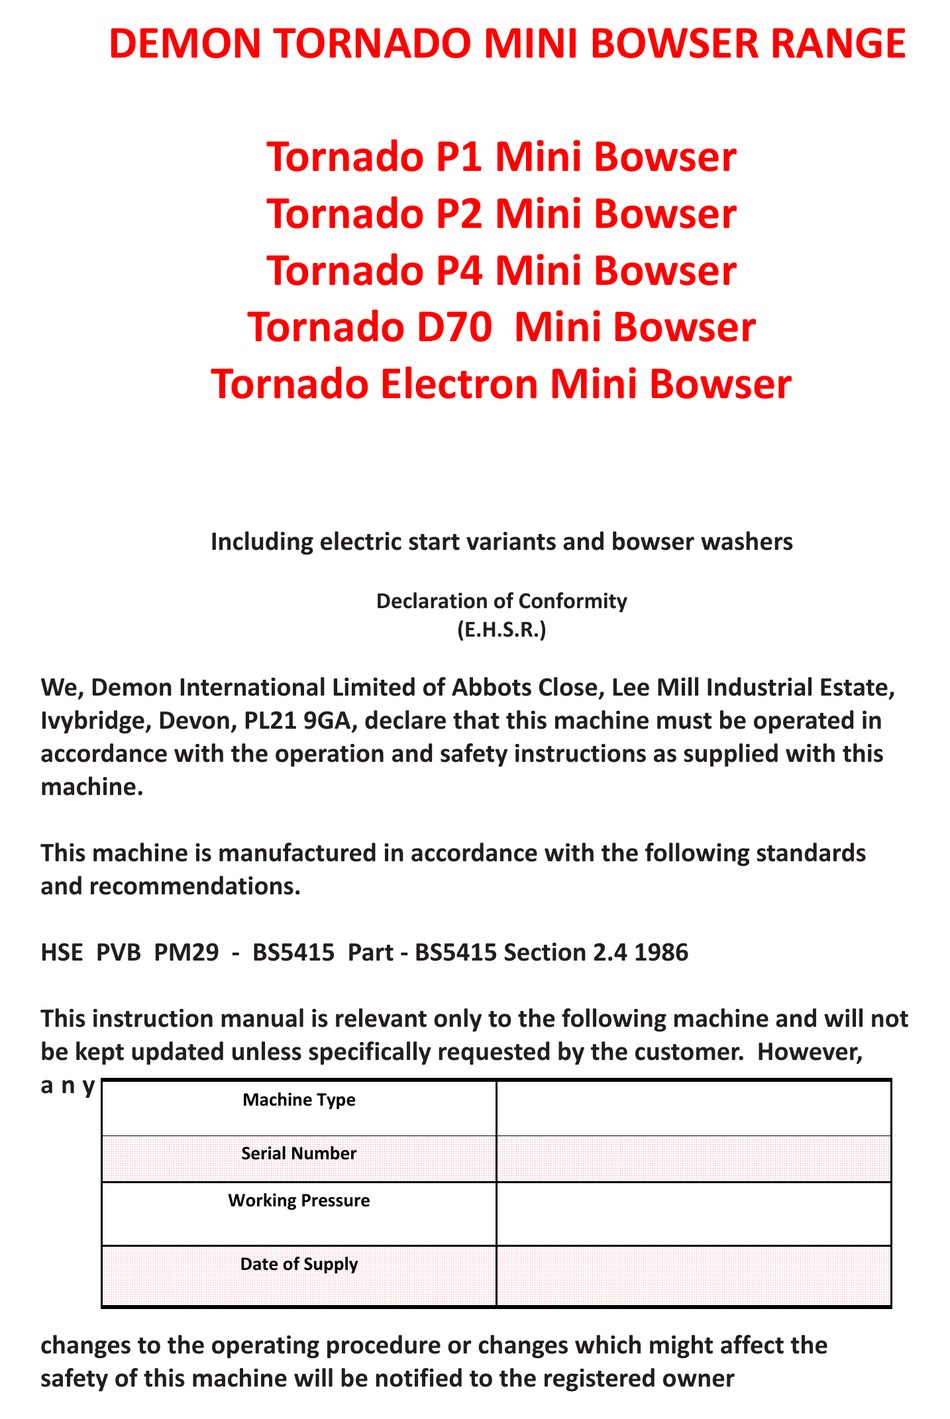 DEMON INTERNATIONAL TORNADO P1 MINI BOWSER INSTRUCTION MANUAL Pdf Download